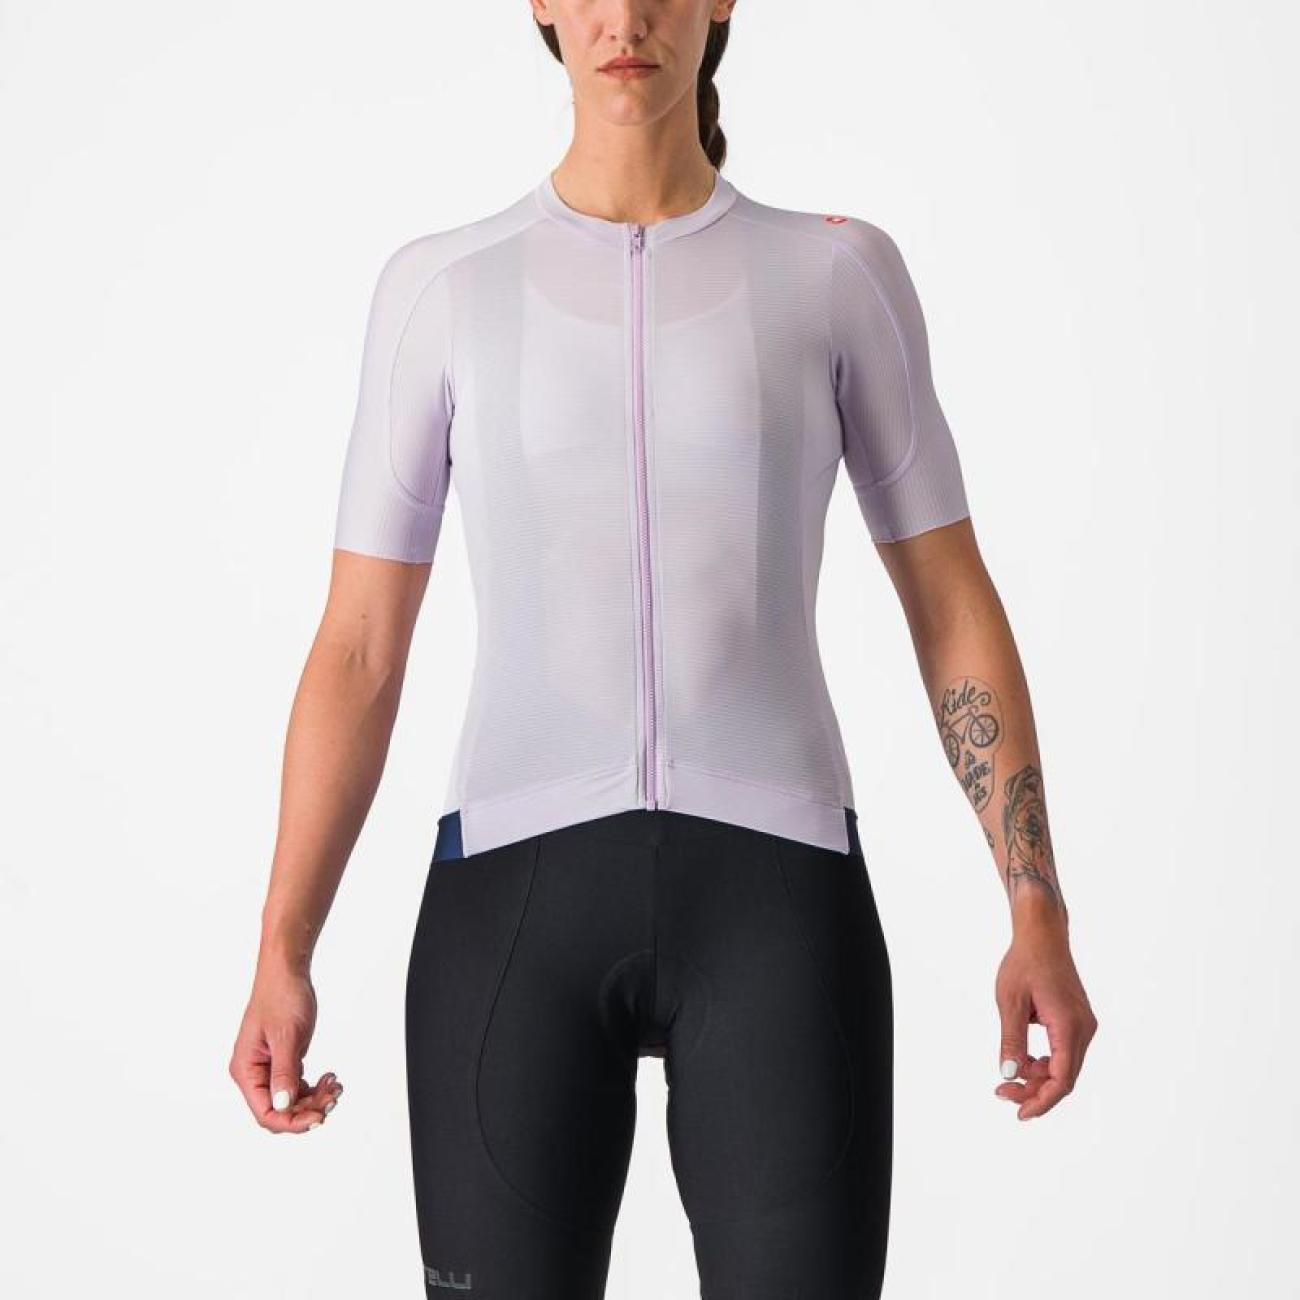 CASTELLI Cyklistický dres s krátkým rukávem - ESPRESSO W - fialová XL